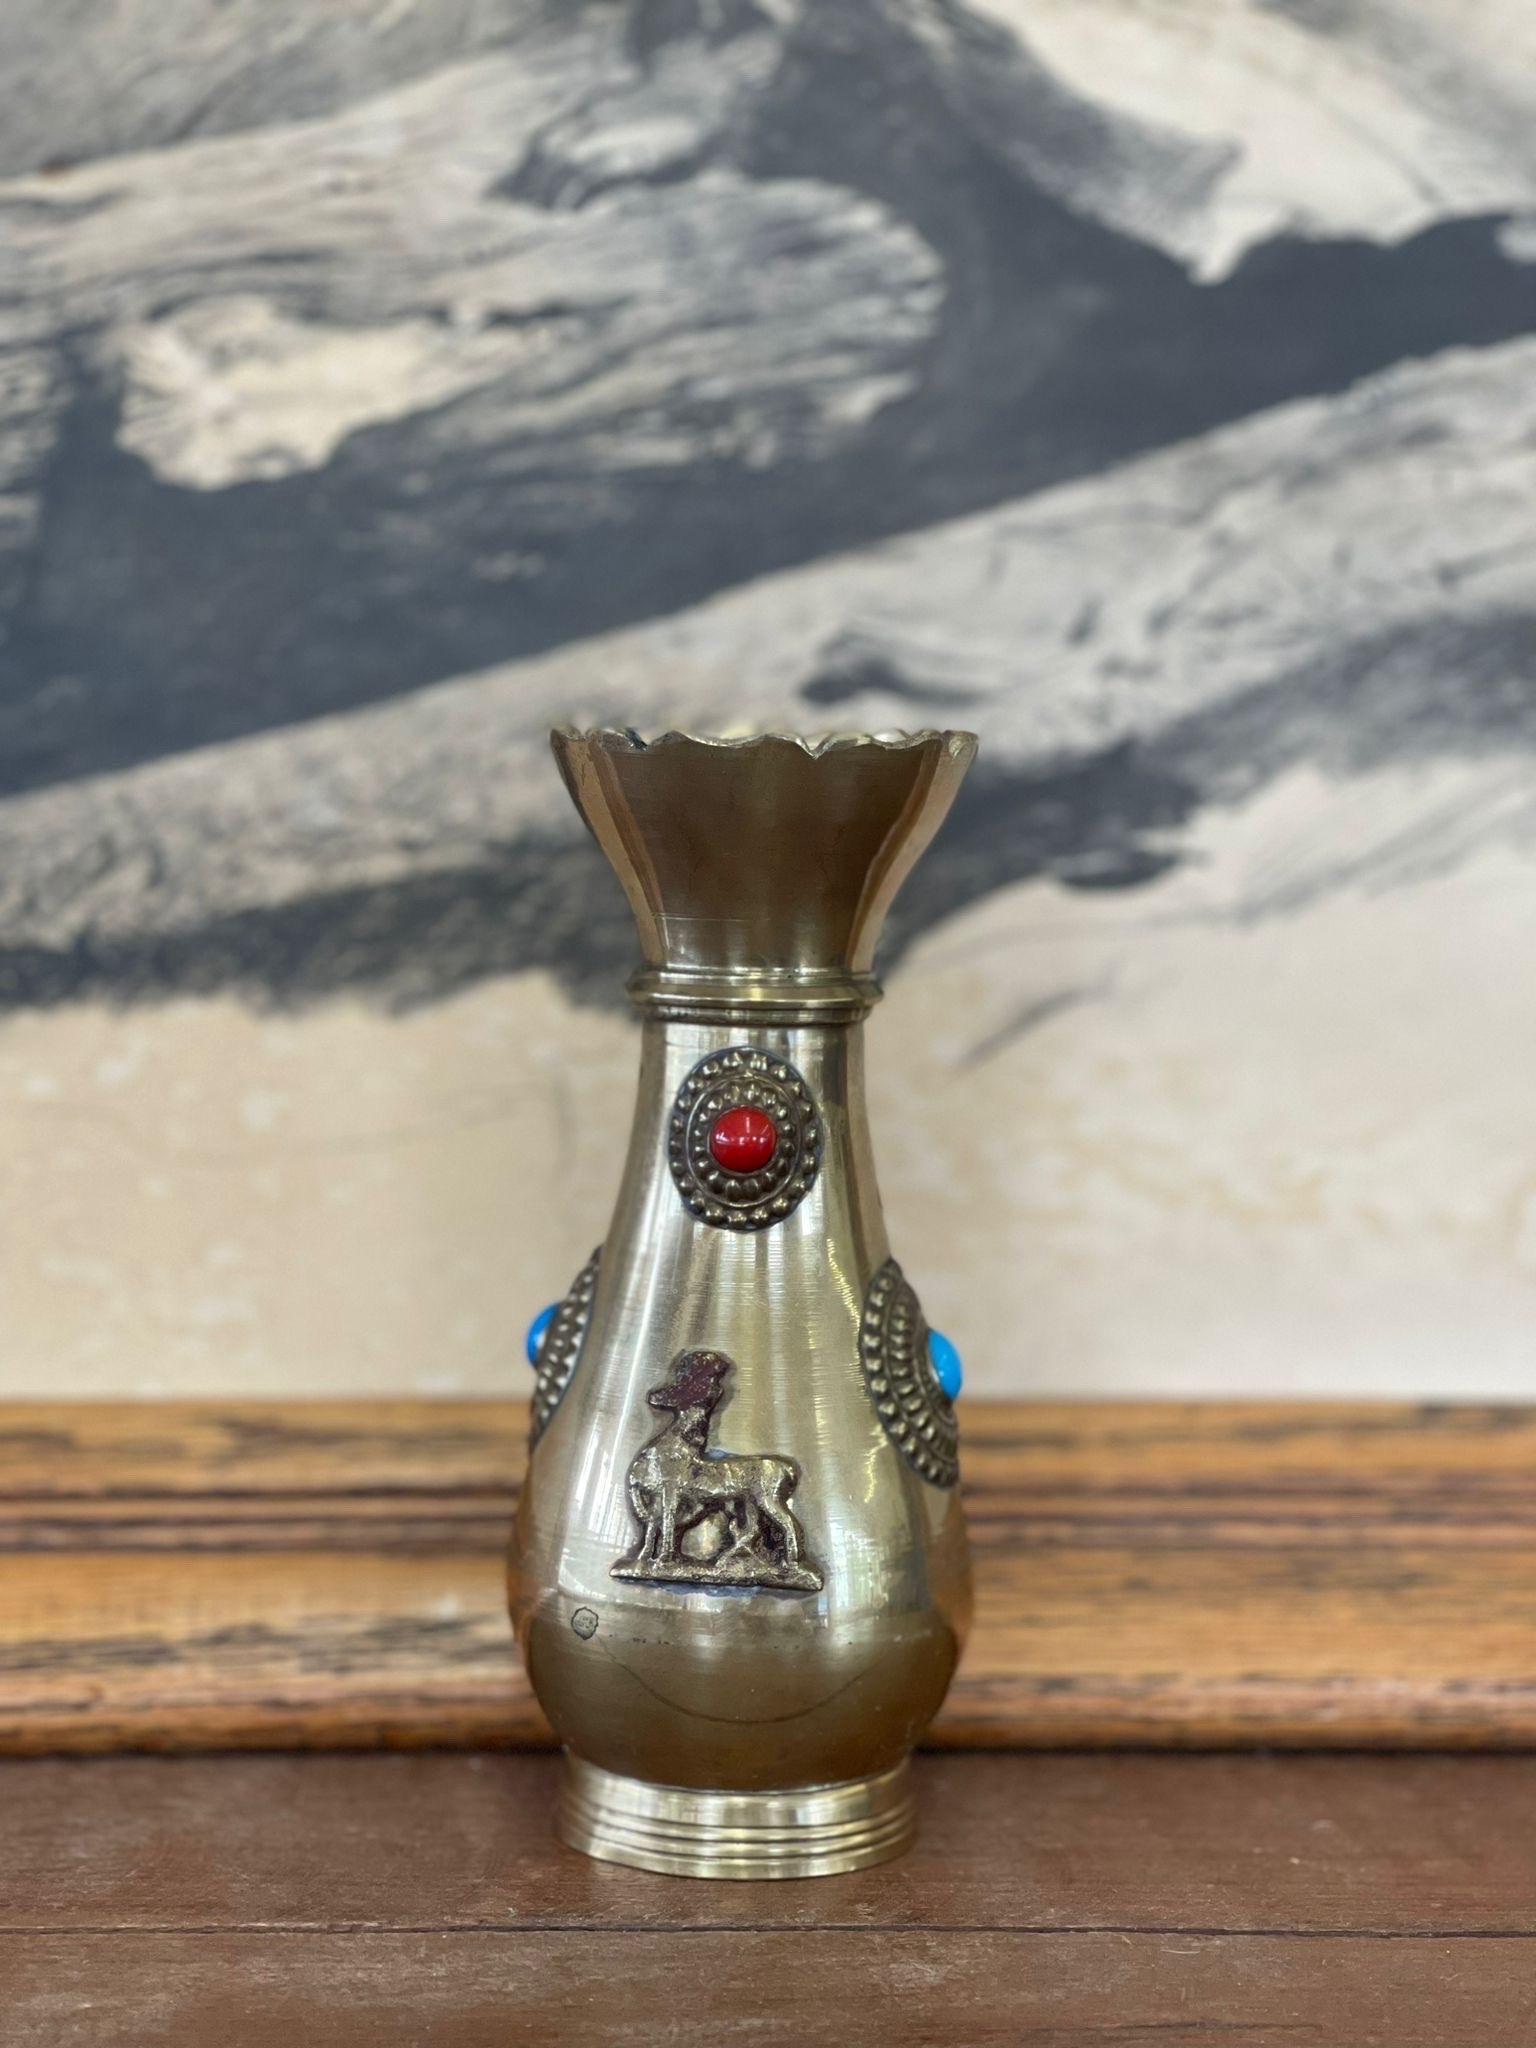 Antiqueq Decorative Brass Bejeweled Vase Red and Blue Accents Decor Art decor

Dimensions. 3 L ; 3 P ; 6 H